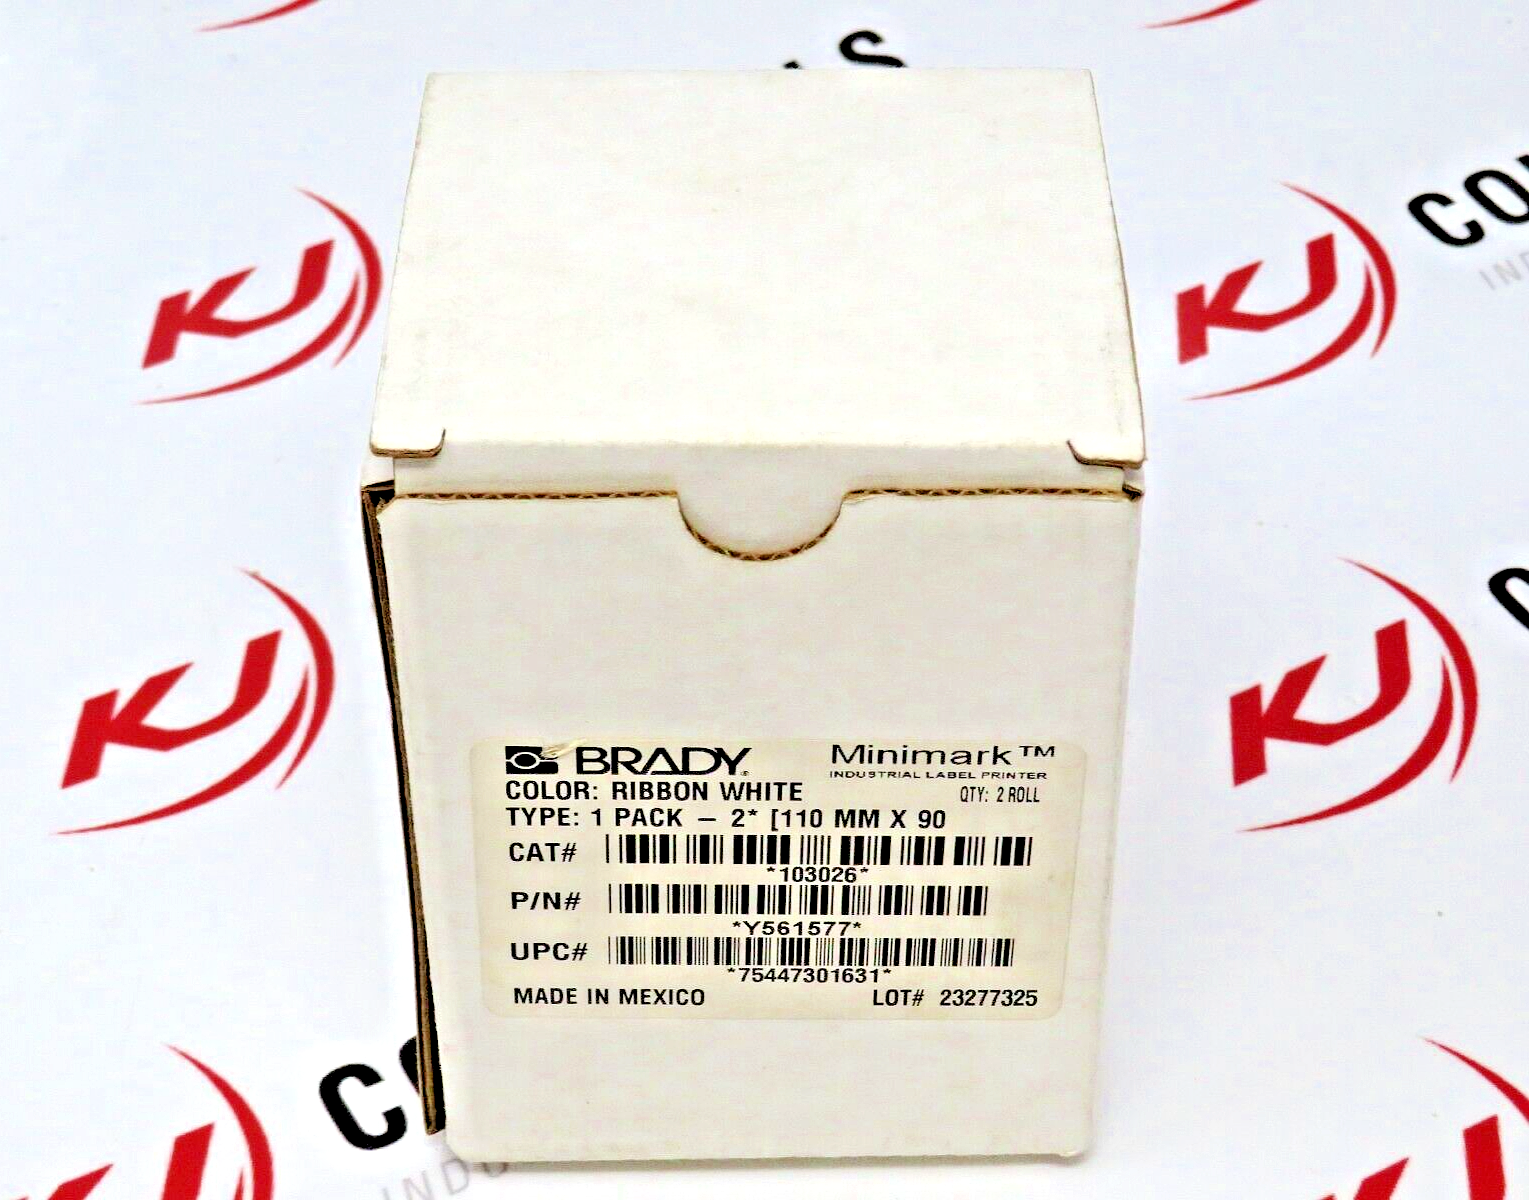 Brady 103026 MiniMark 110MM X 90M White IND. Label Printer Ribbon (Pack of 2)